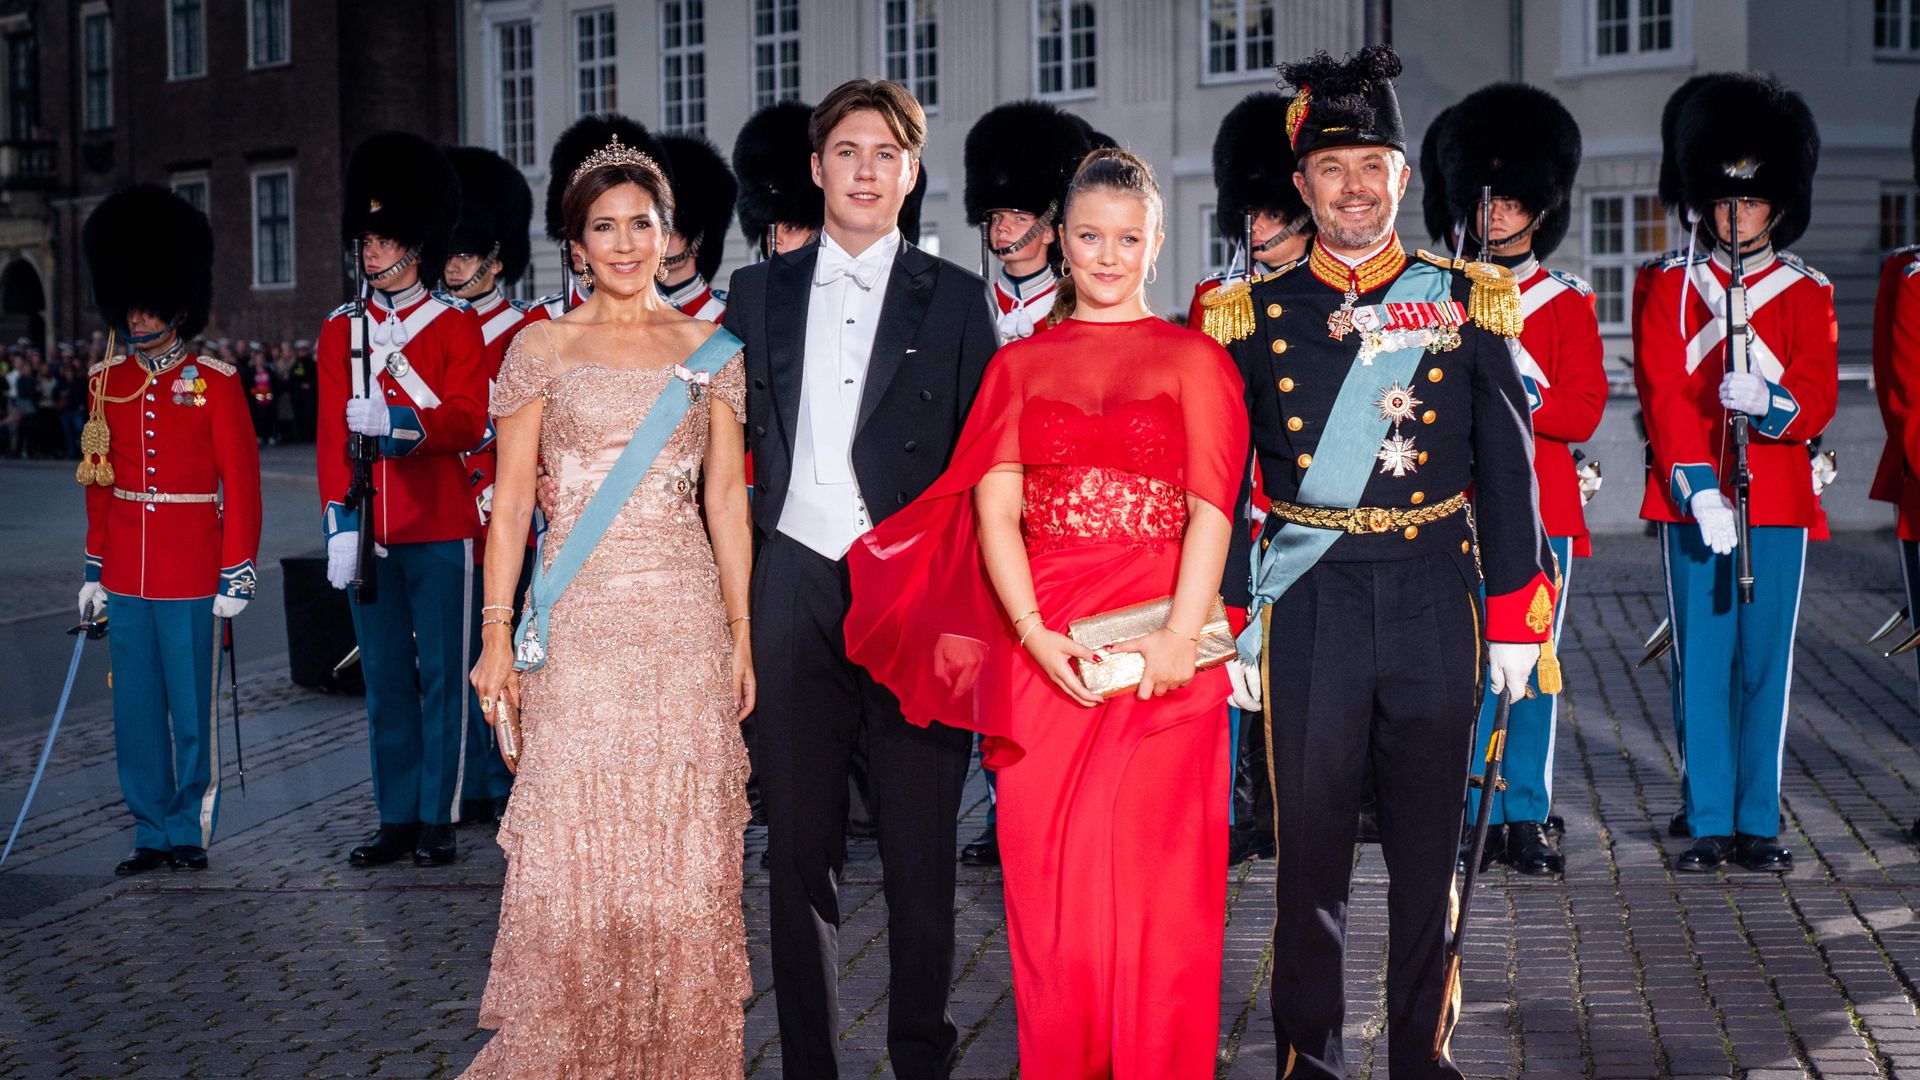 Prince Christian's lavish dress code for 18th birthday gala revealed